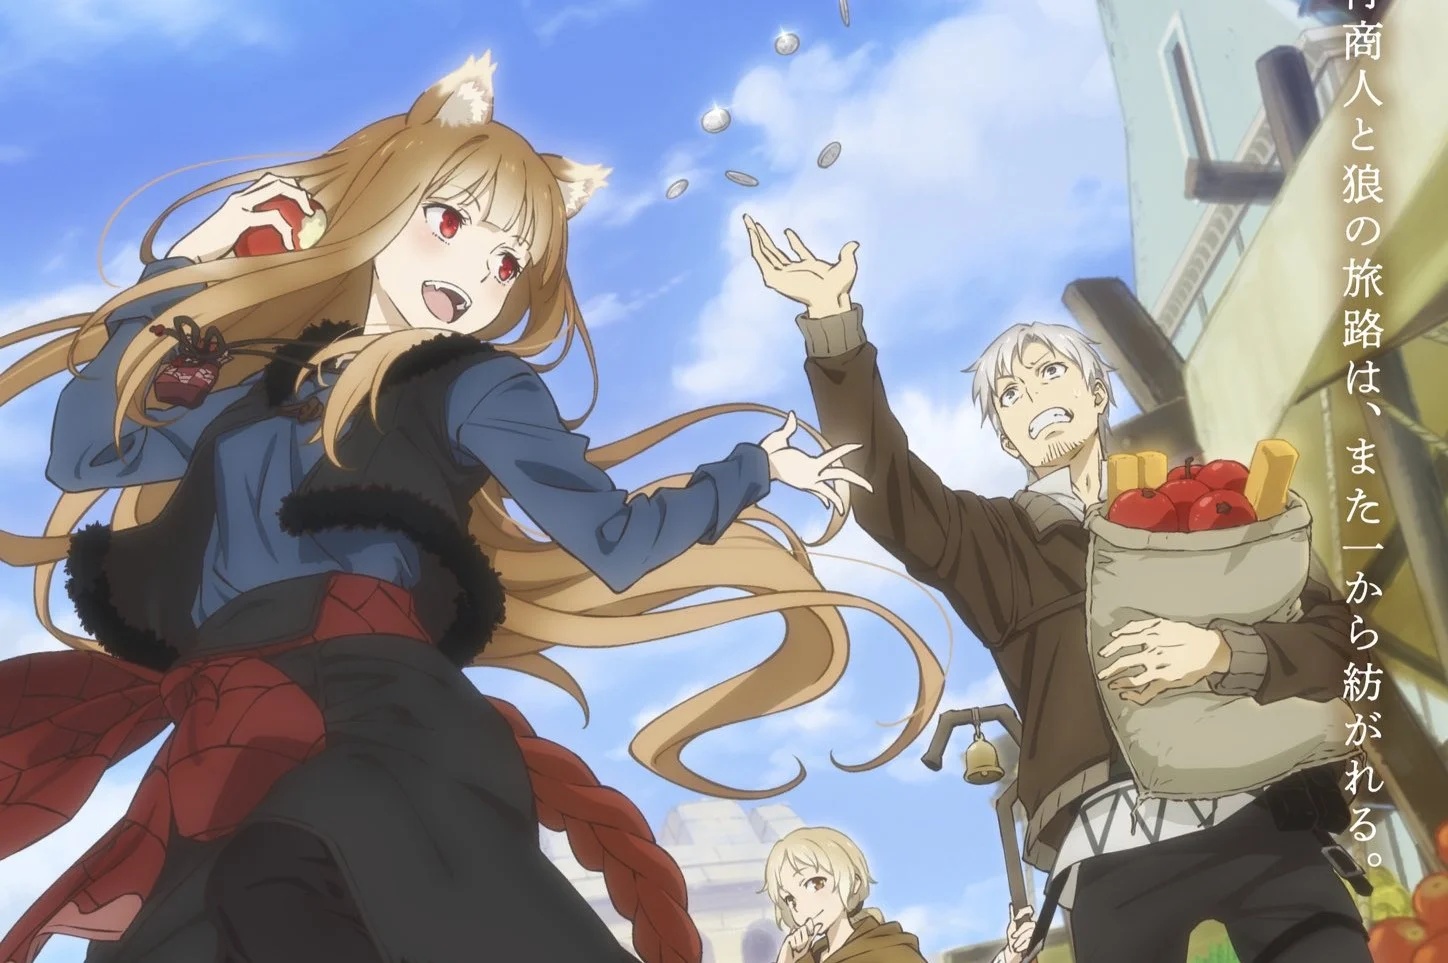 Spice and wolf Ookami to Koushinryou: Merchant Meets the Wise Wolf anime news otaku mantra